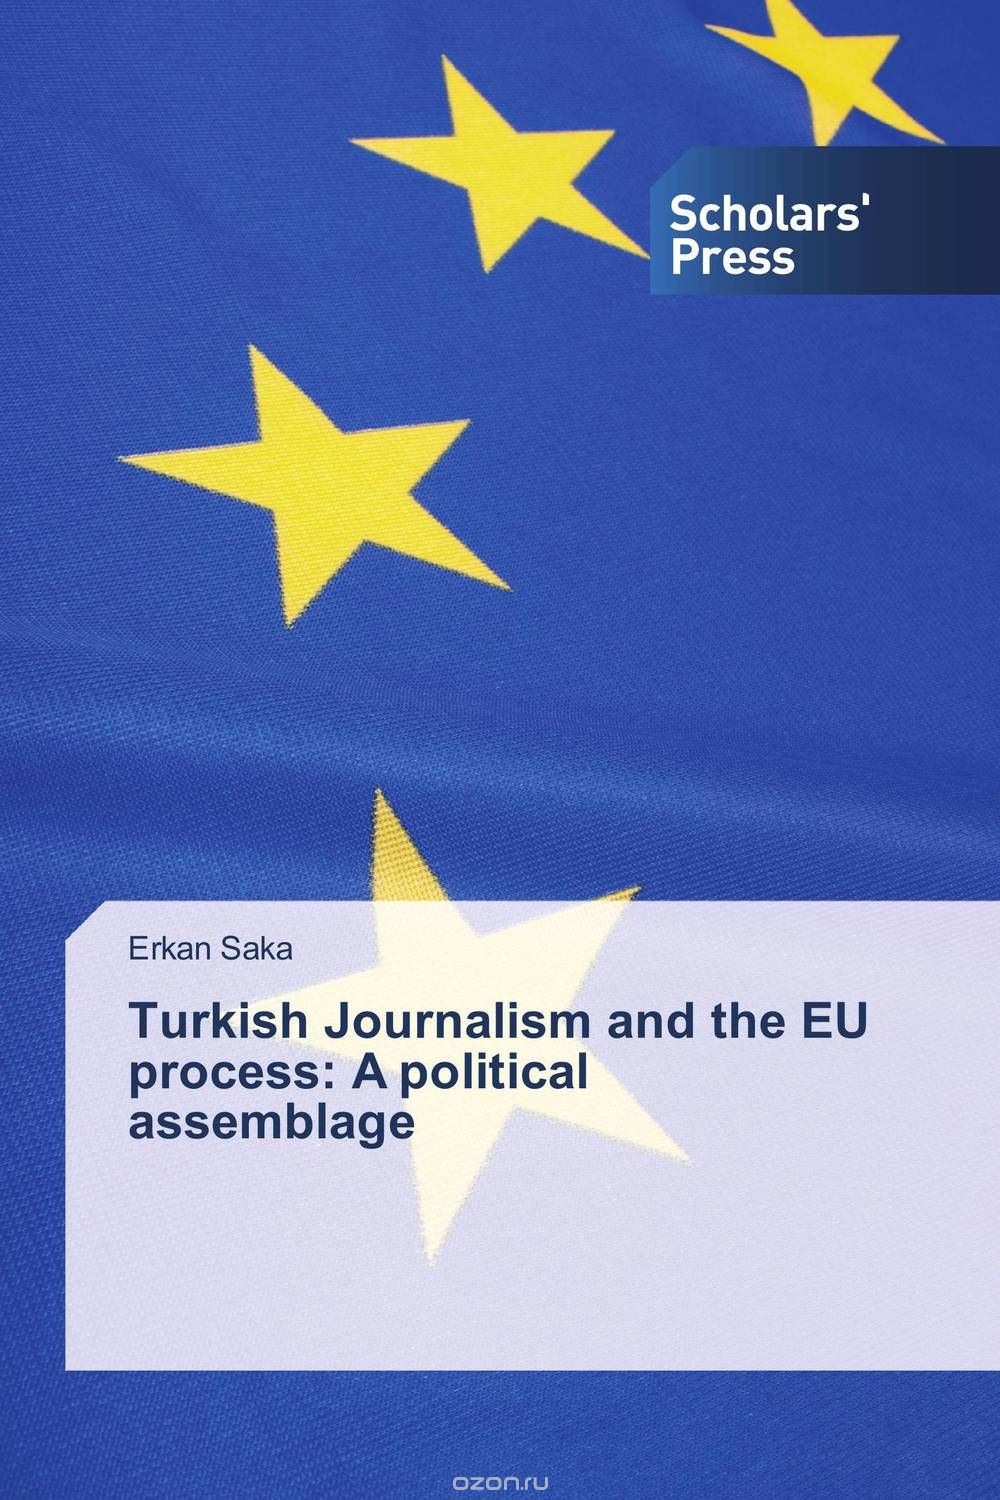 Скачать книгу "Turkish Journalism and the EU process: A political assemblage"